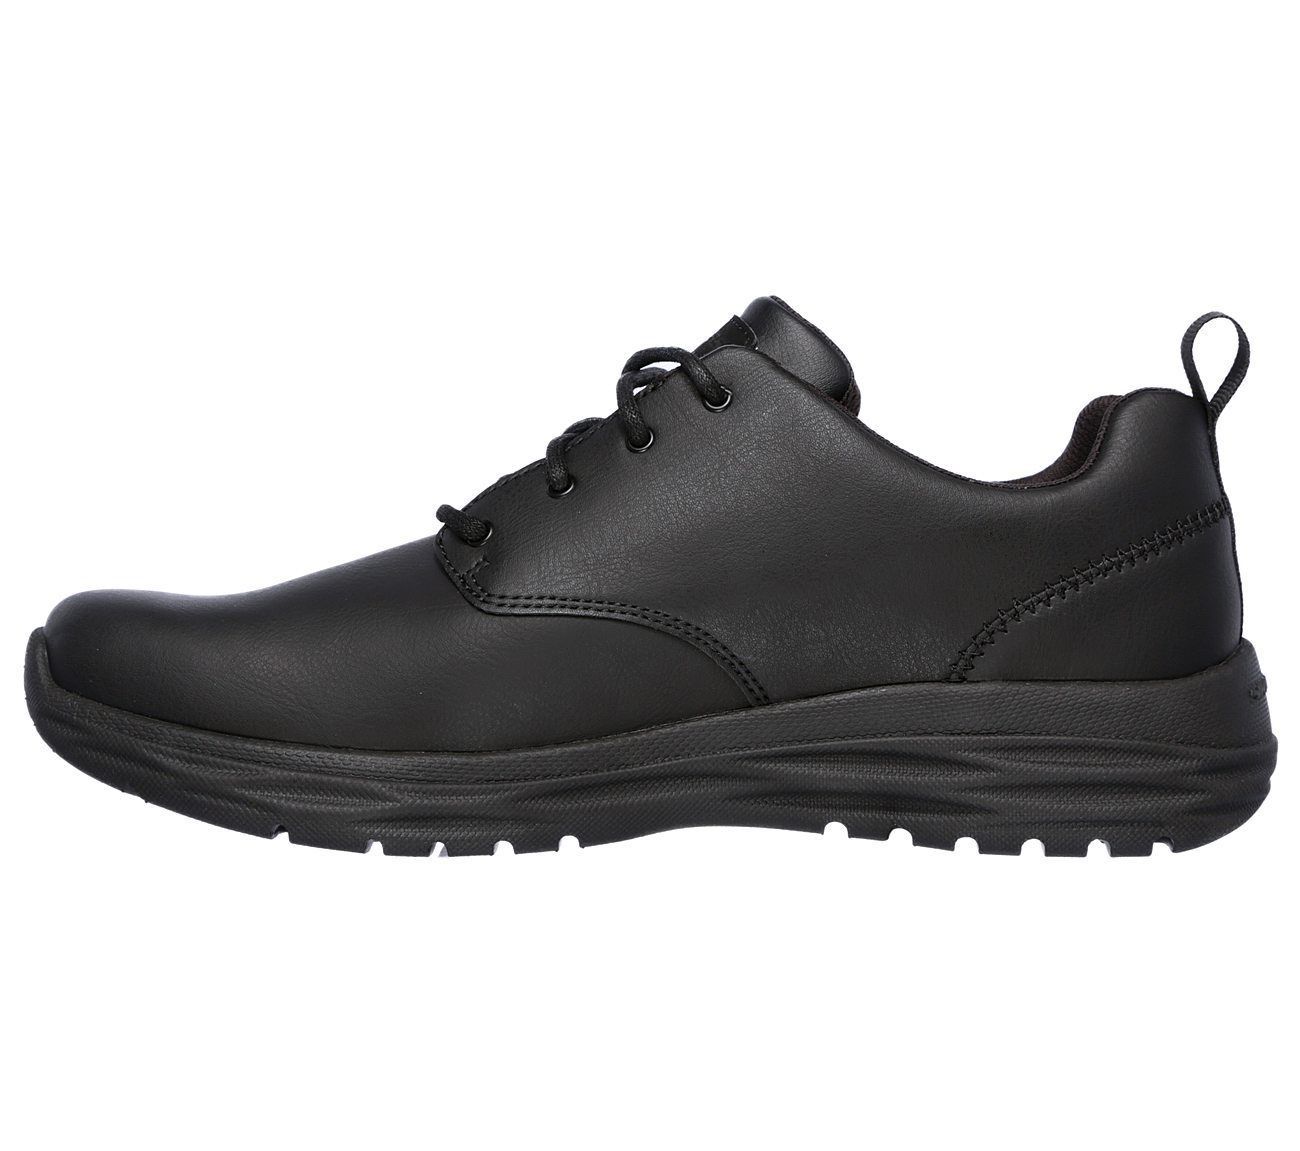 65624 Black Skecher shoes Men's Memory Foam Casual Comfort Dress Oxford ...